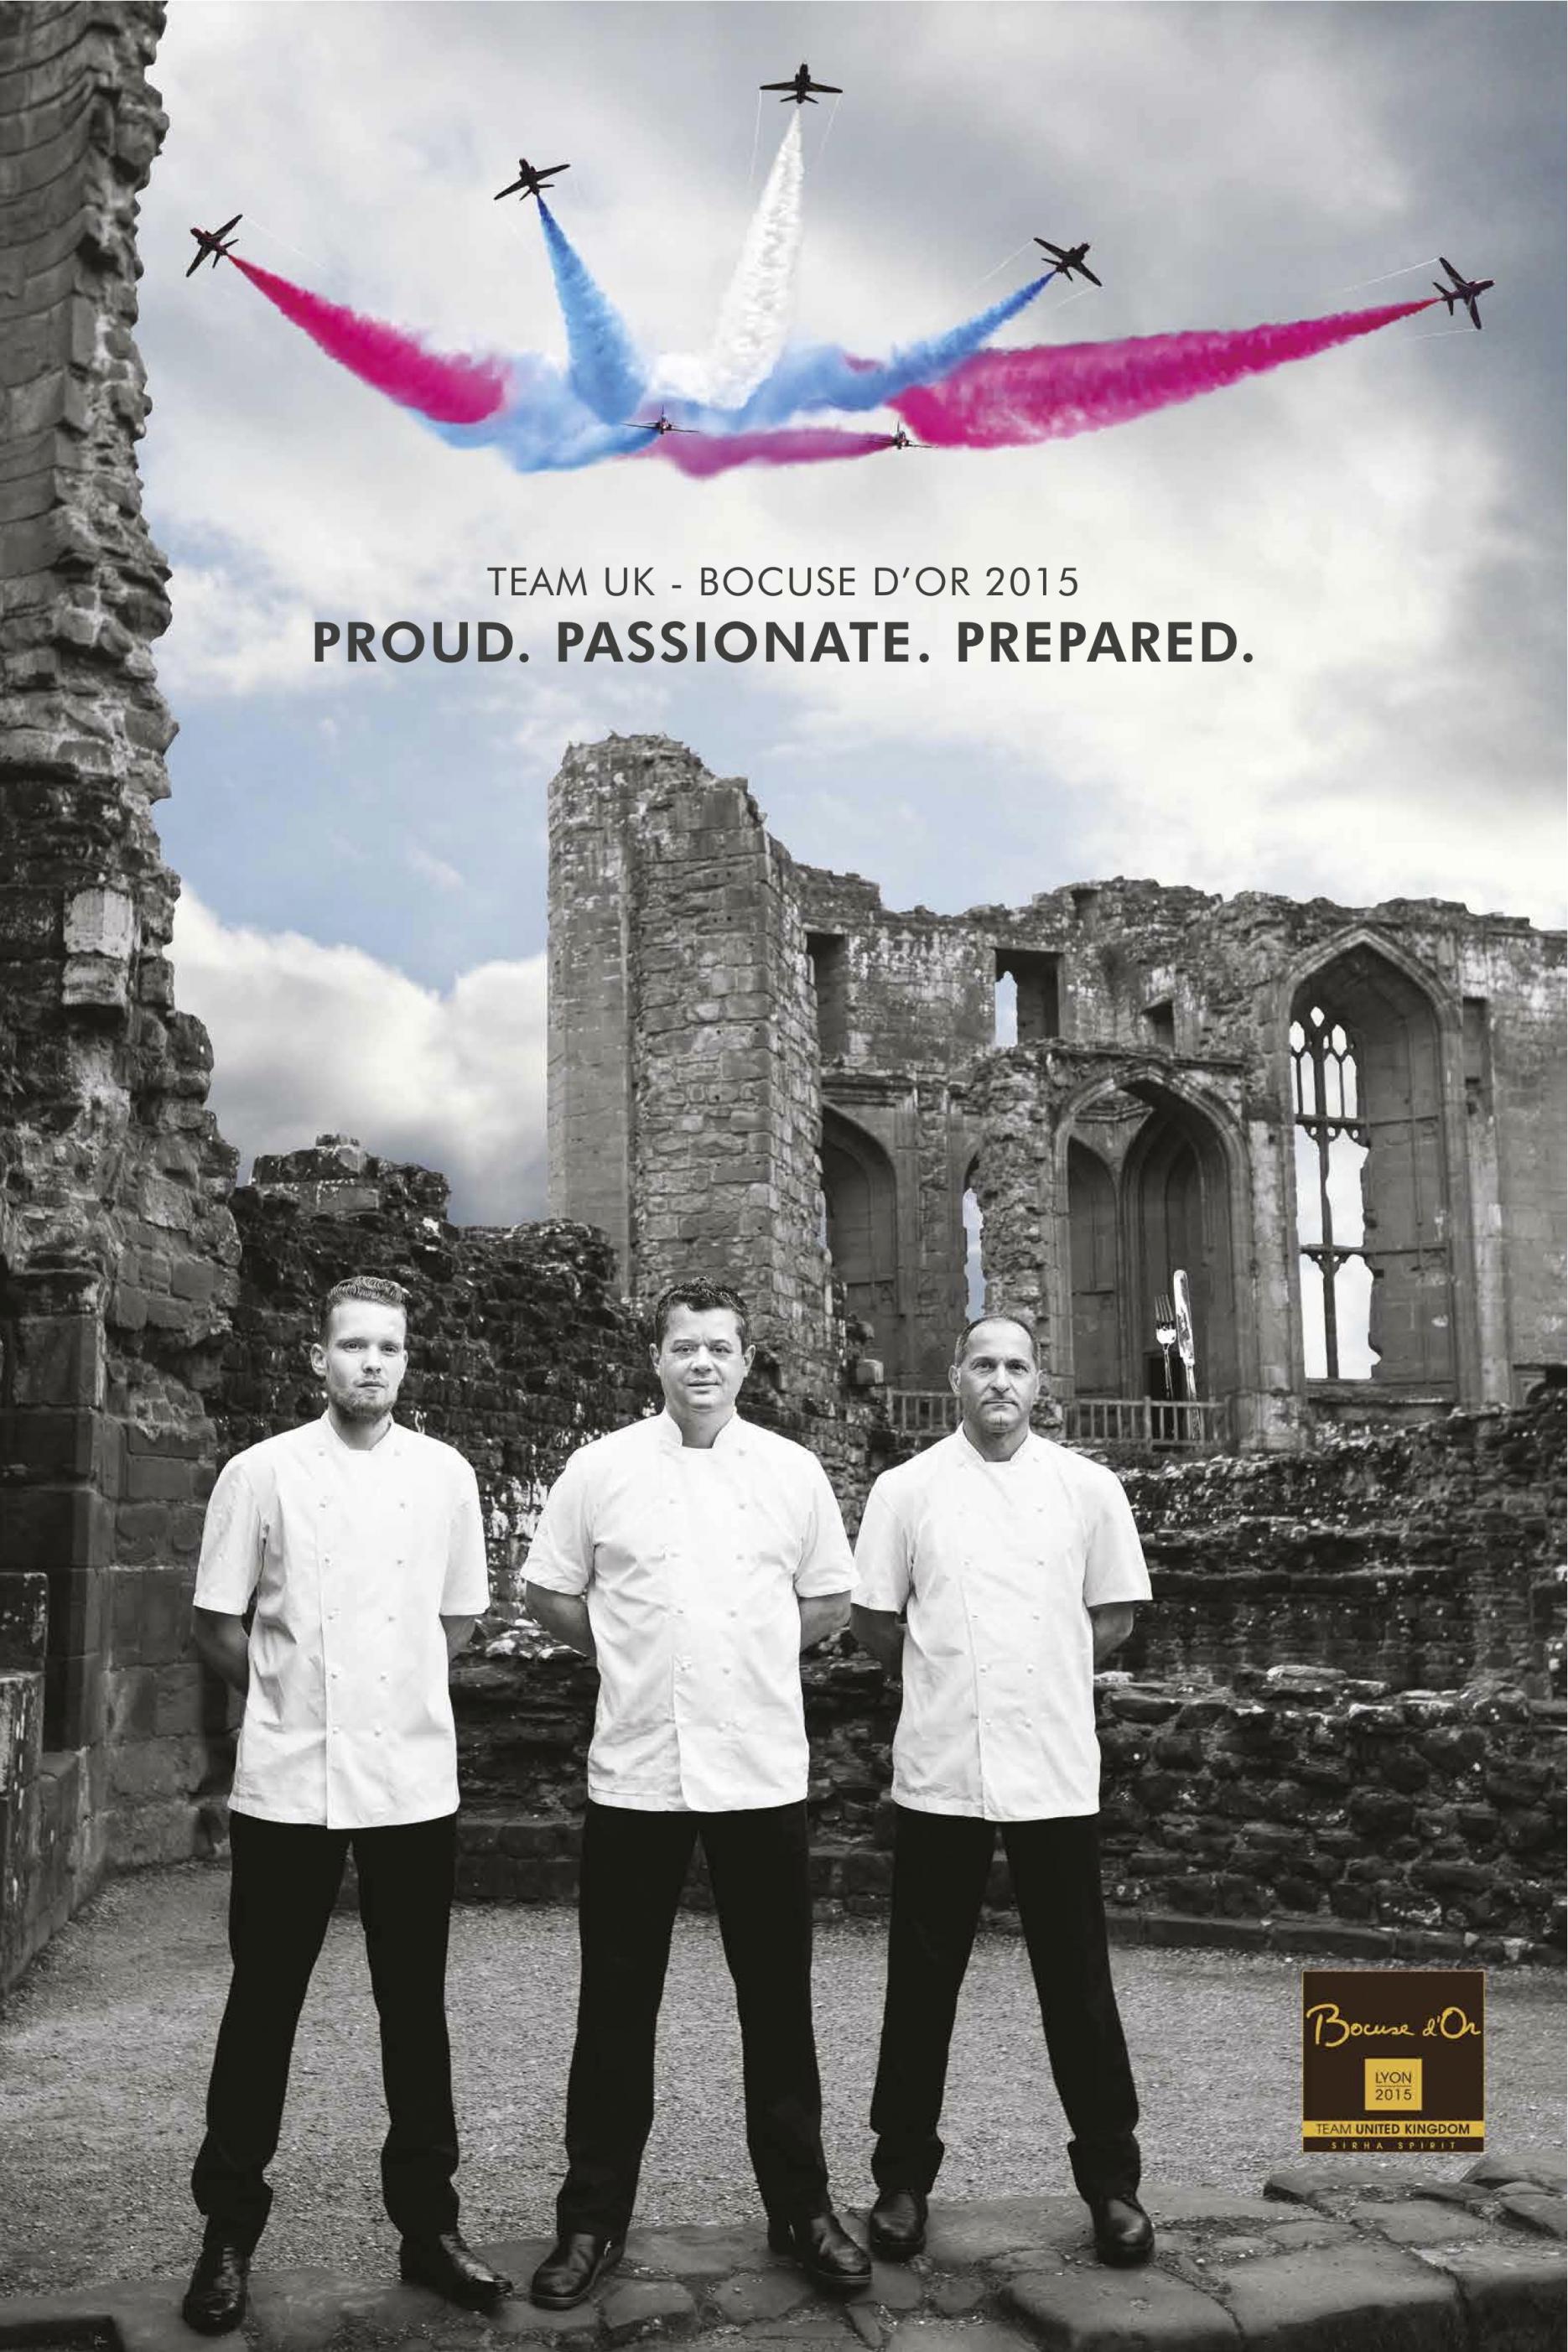 Bocuse d'Or Team UK unveils promotional poster